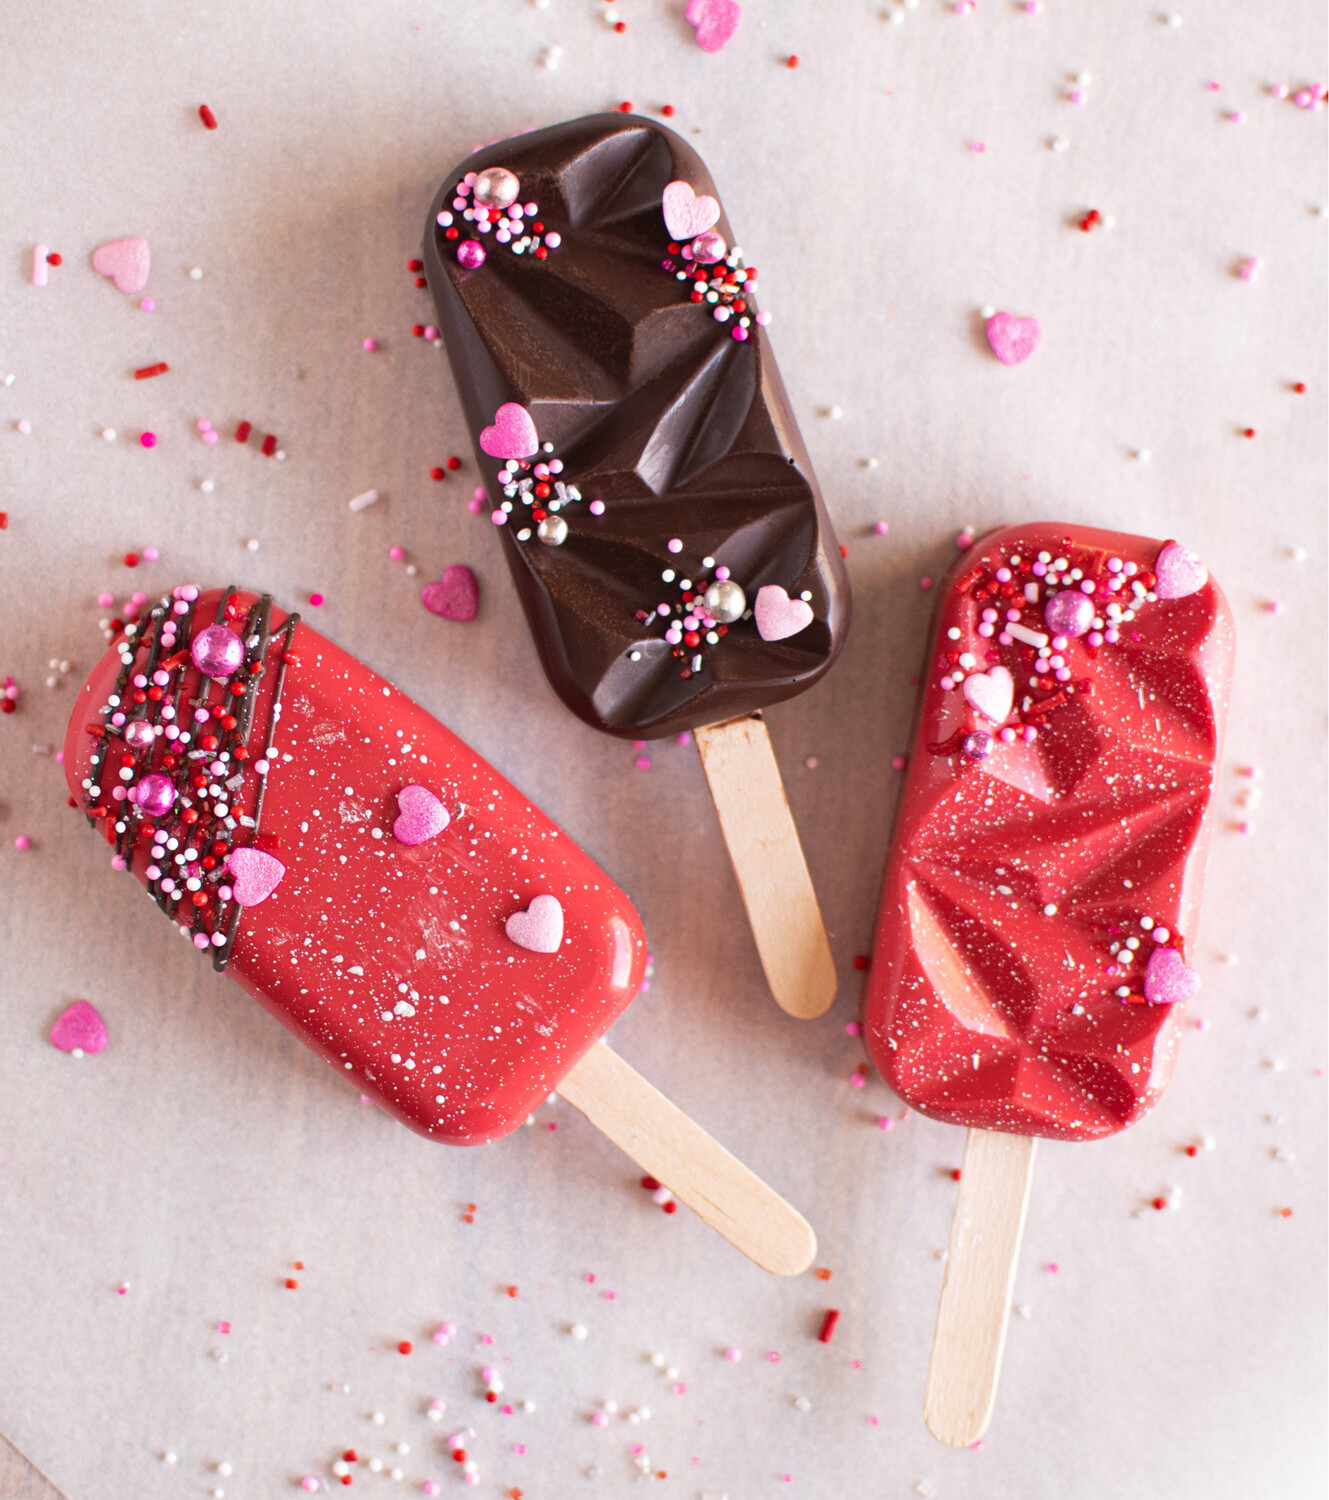 Valentines Cookie-dough Pops